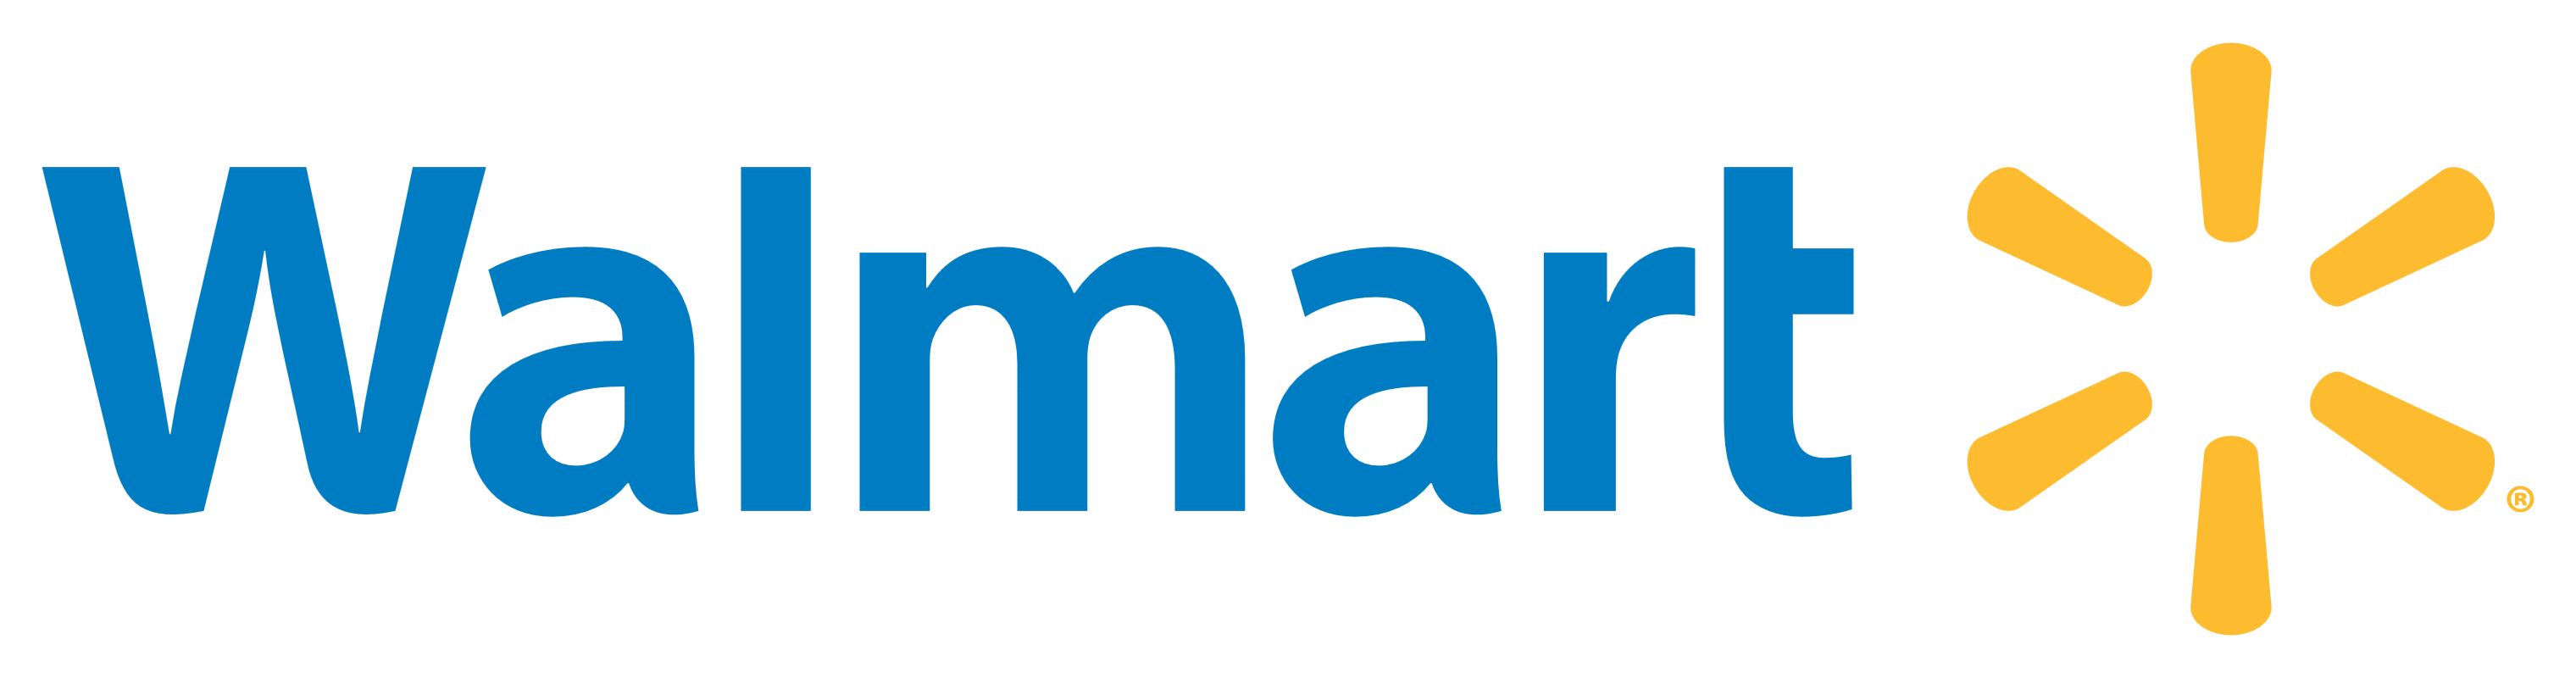 Walmart - Retail Services Group